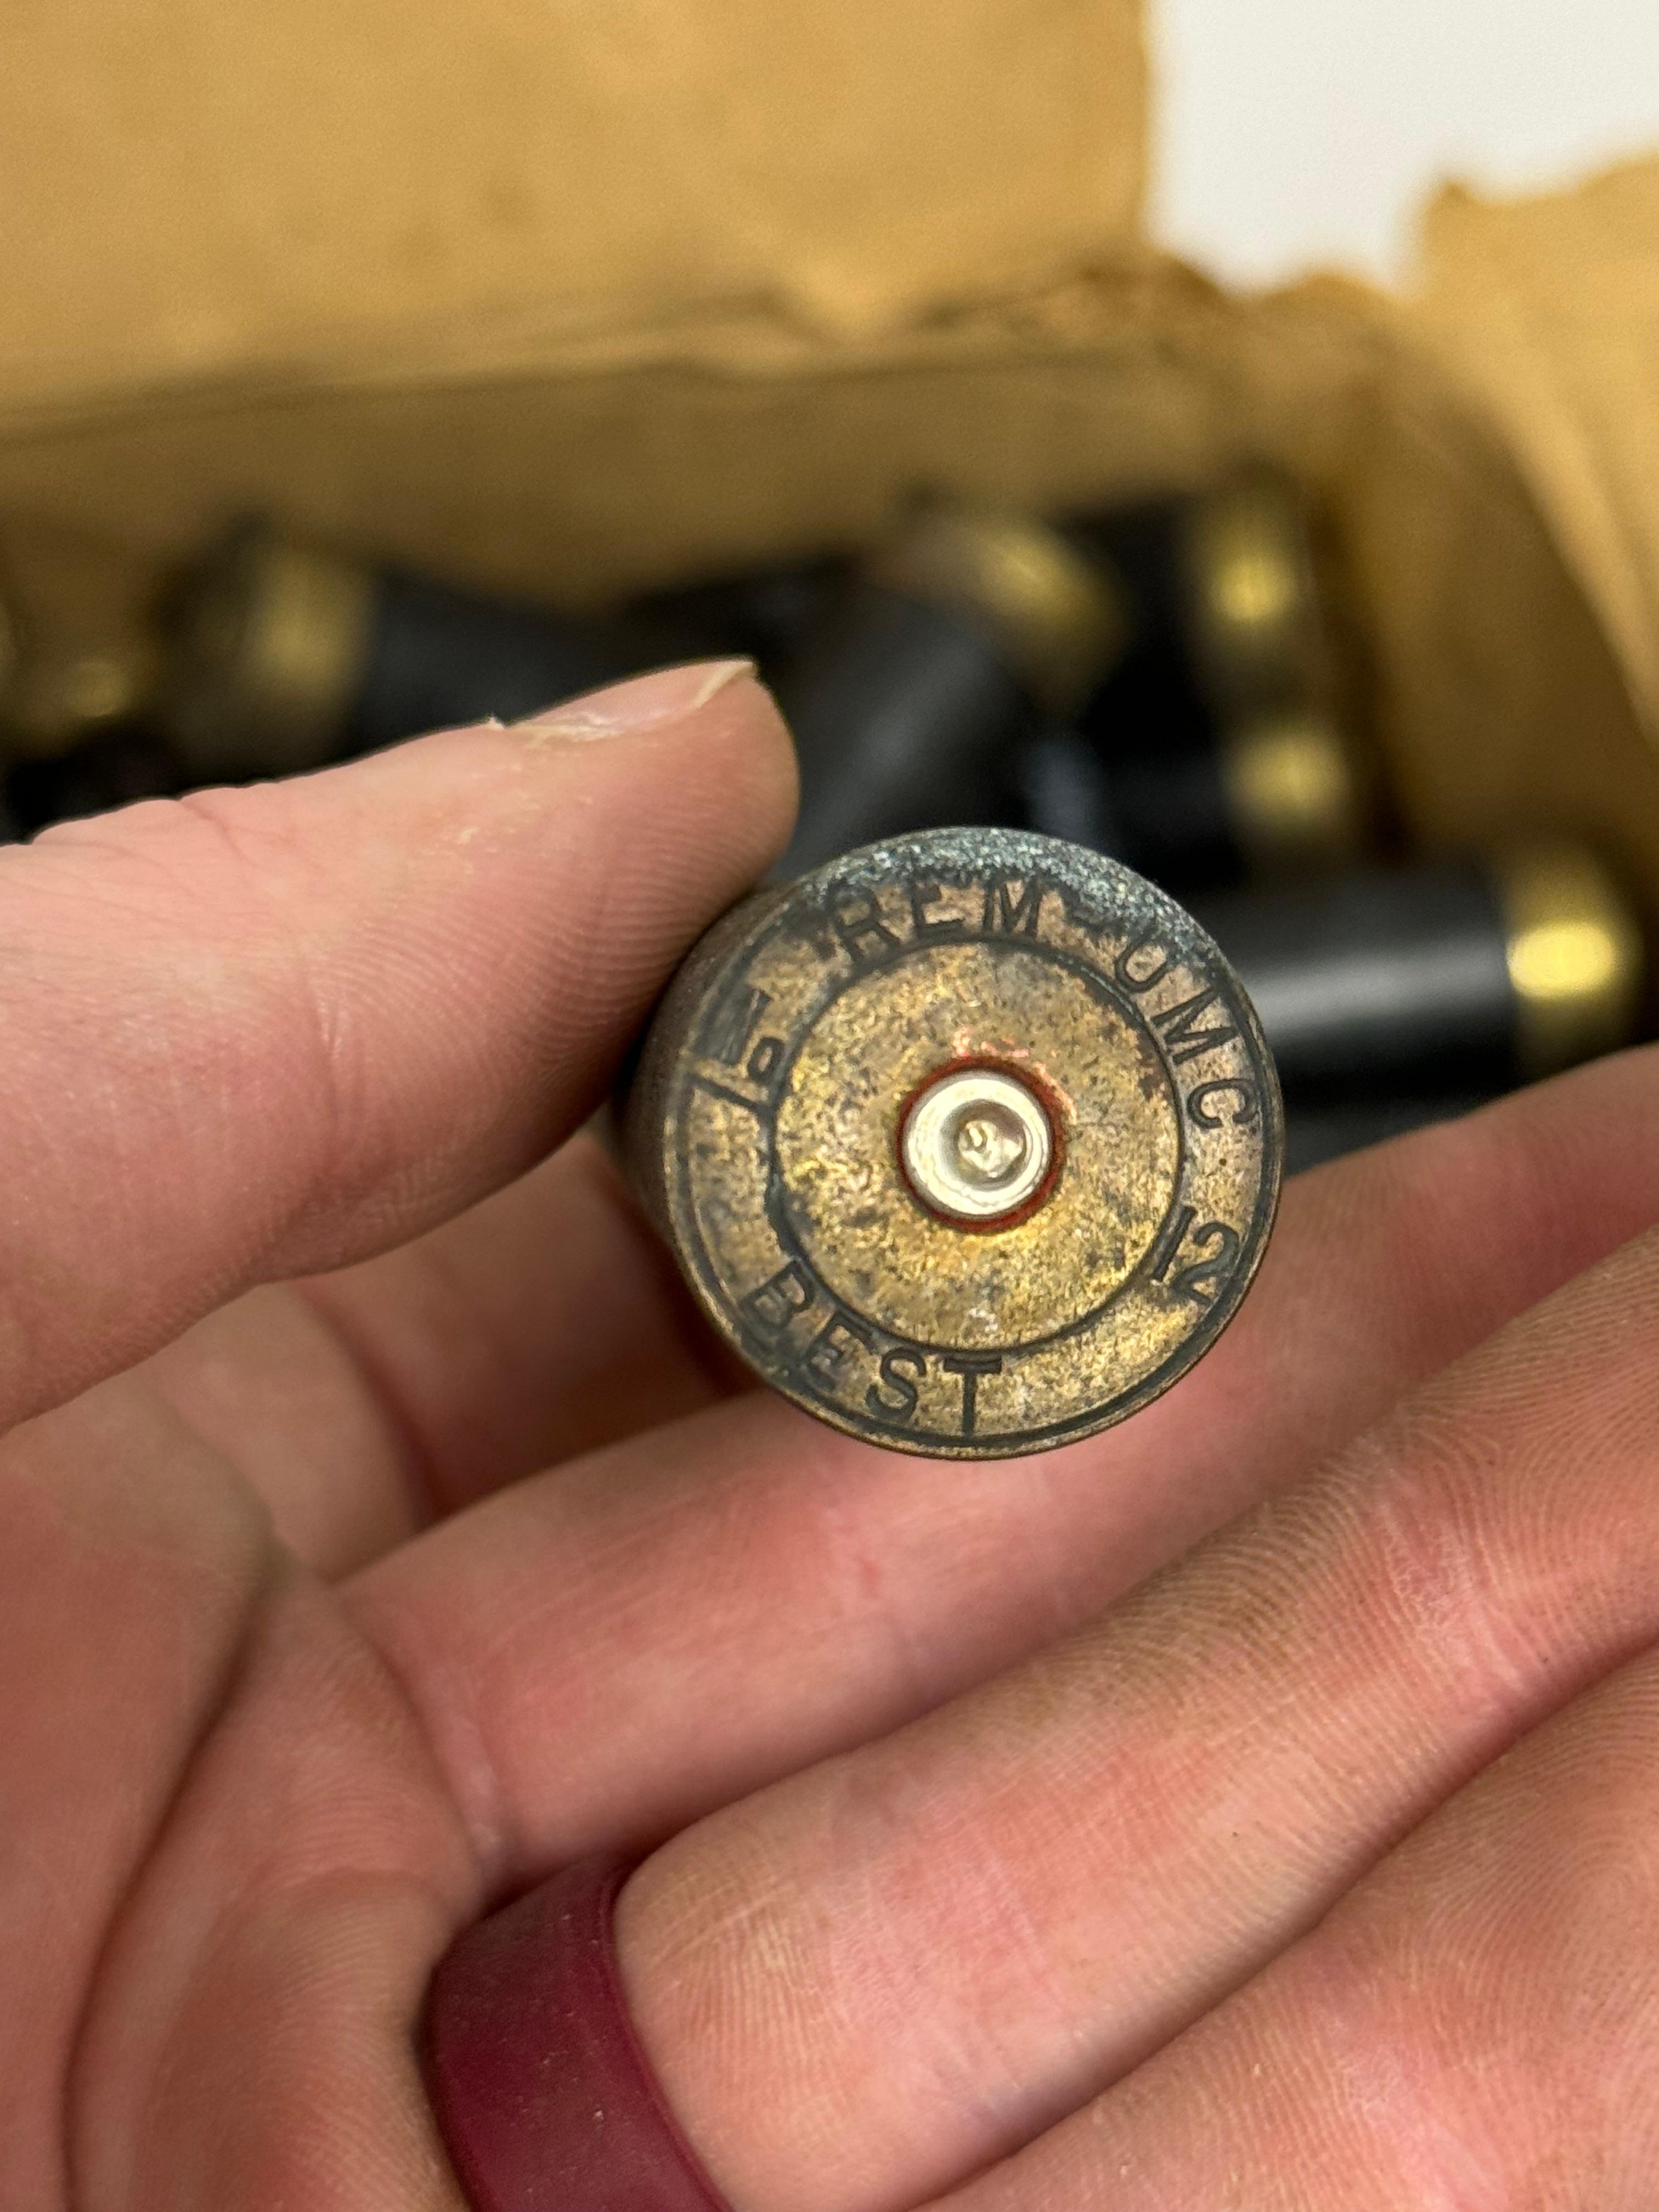 Approx. 300 Shotshells of 12 GA. 2-3/4” 4-Shot Reloaded Shotgun Shells (29.5 Lb.)